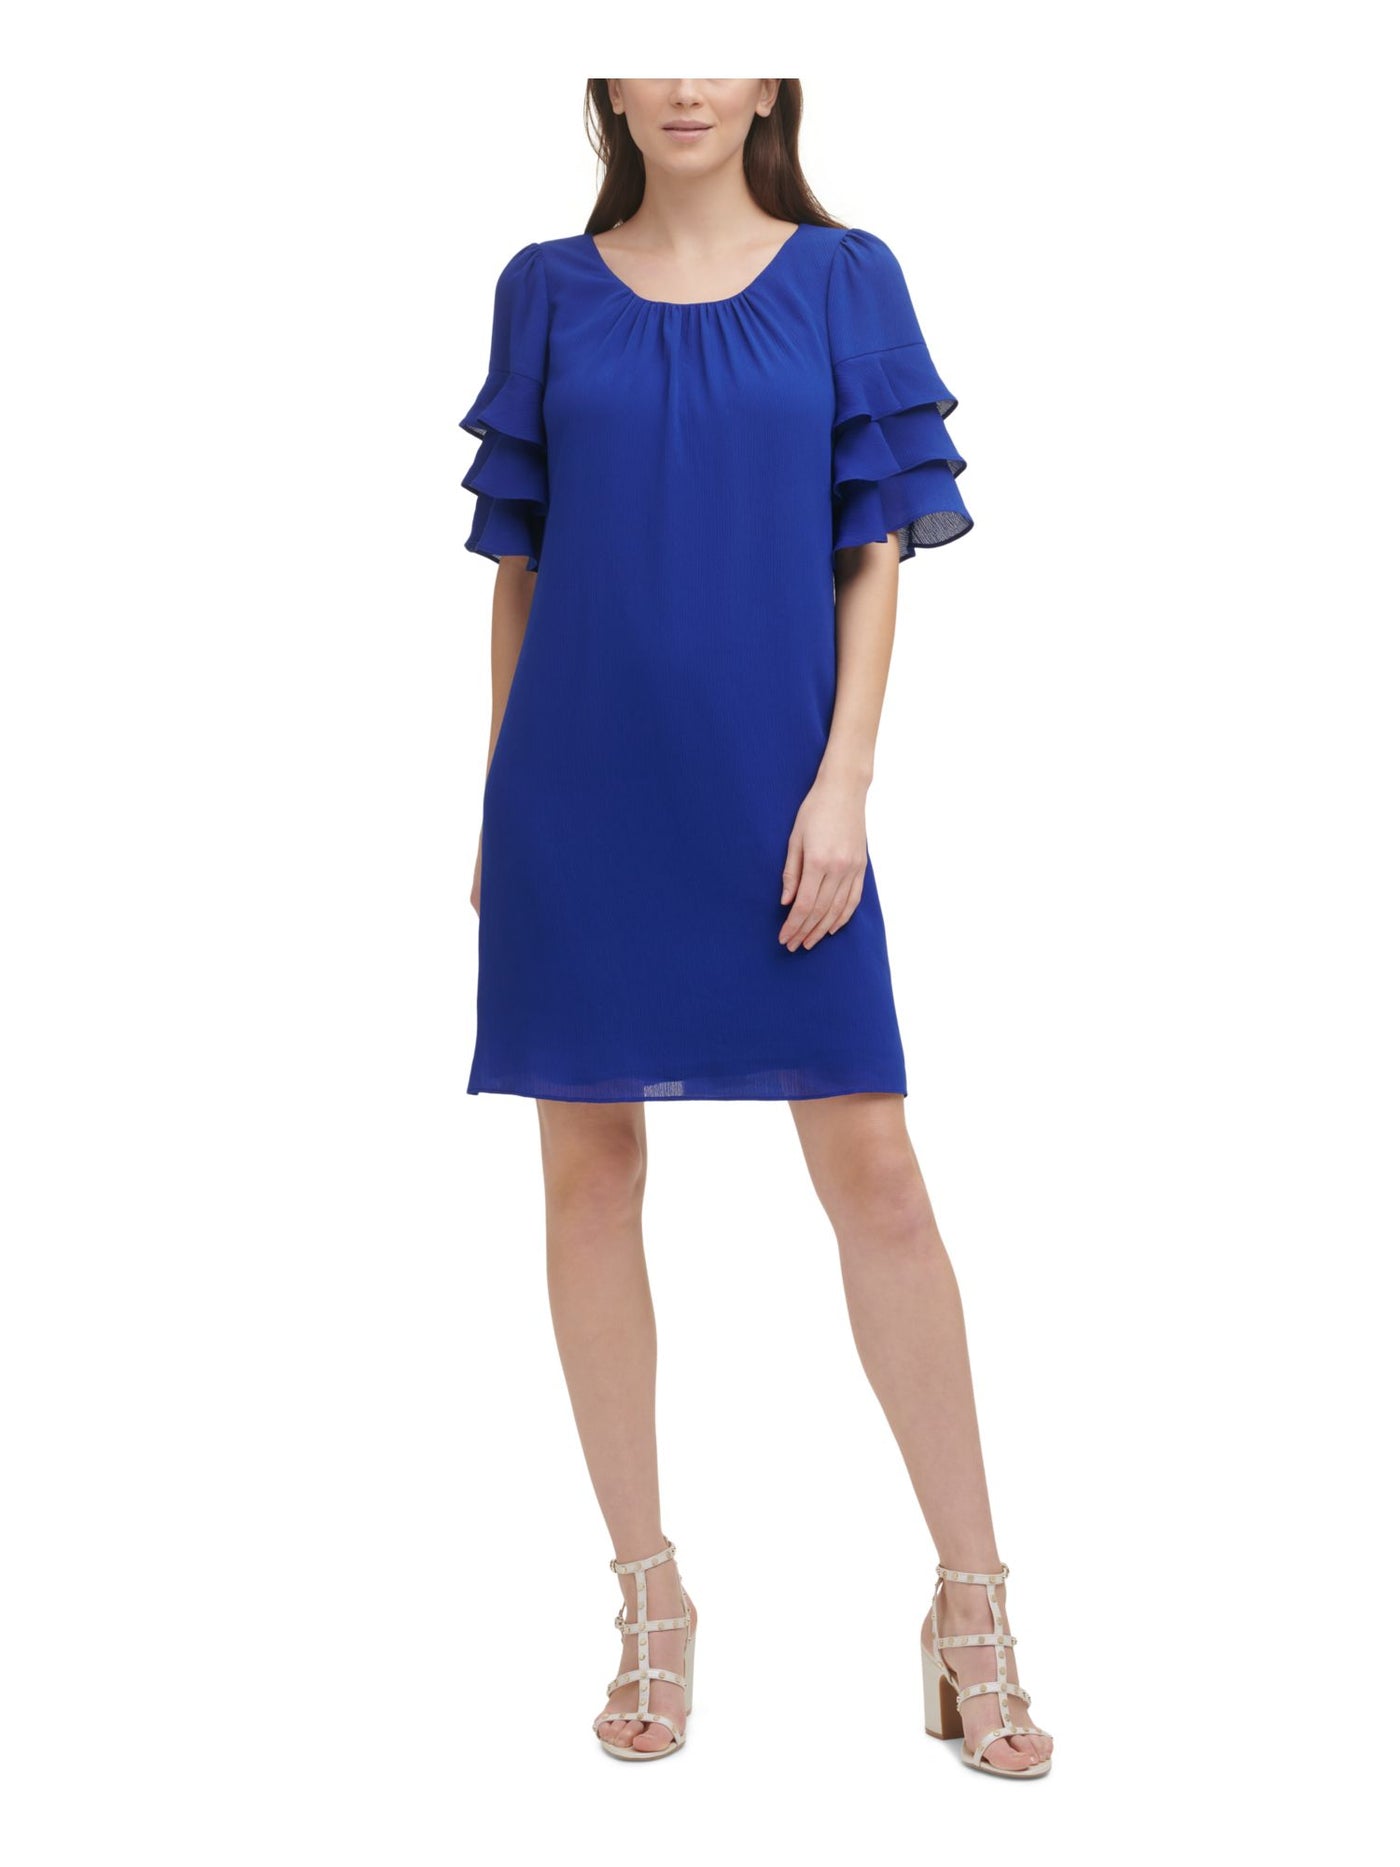 DKNY Womens Blue Flutter Sleeve Scoop Neck Above The Knee Wear To Work Shift Dress 6